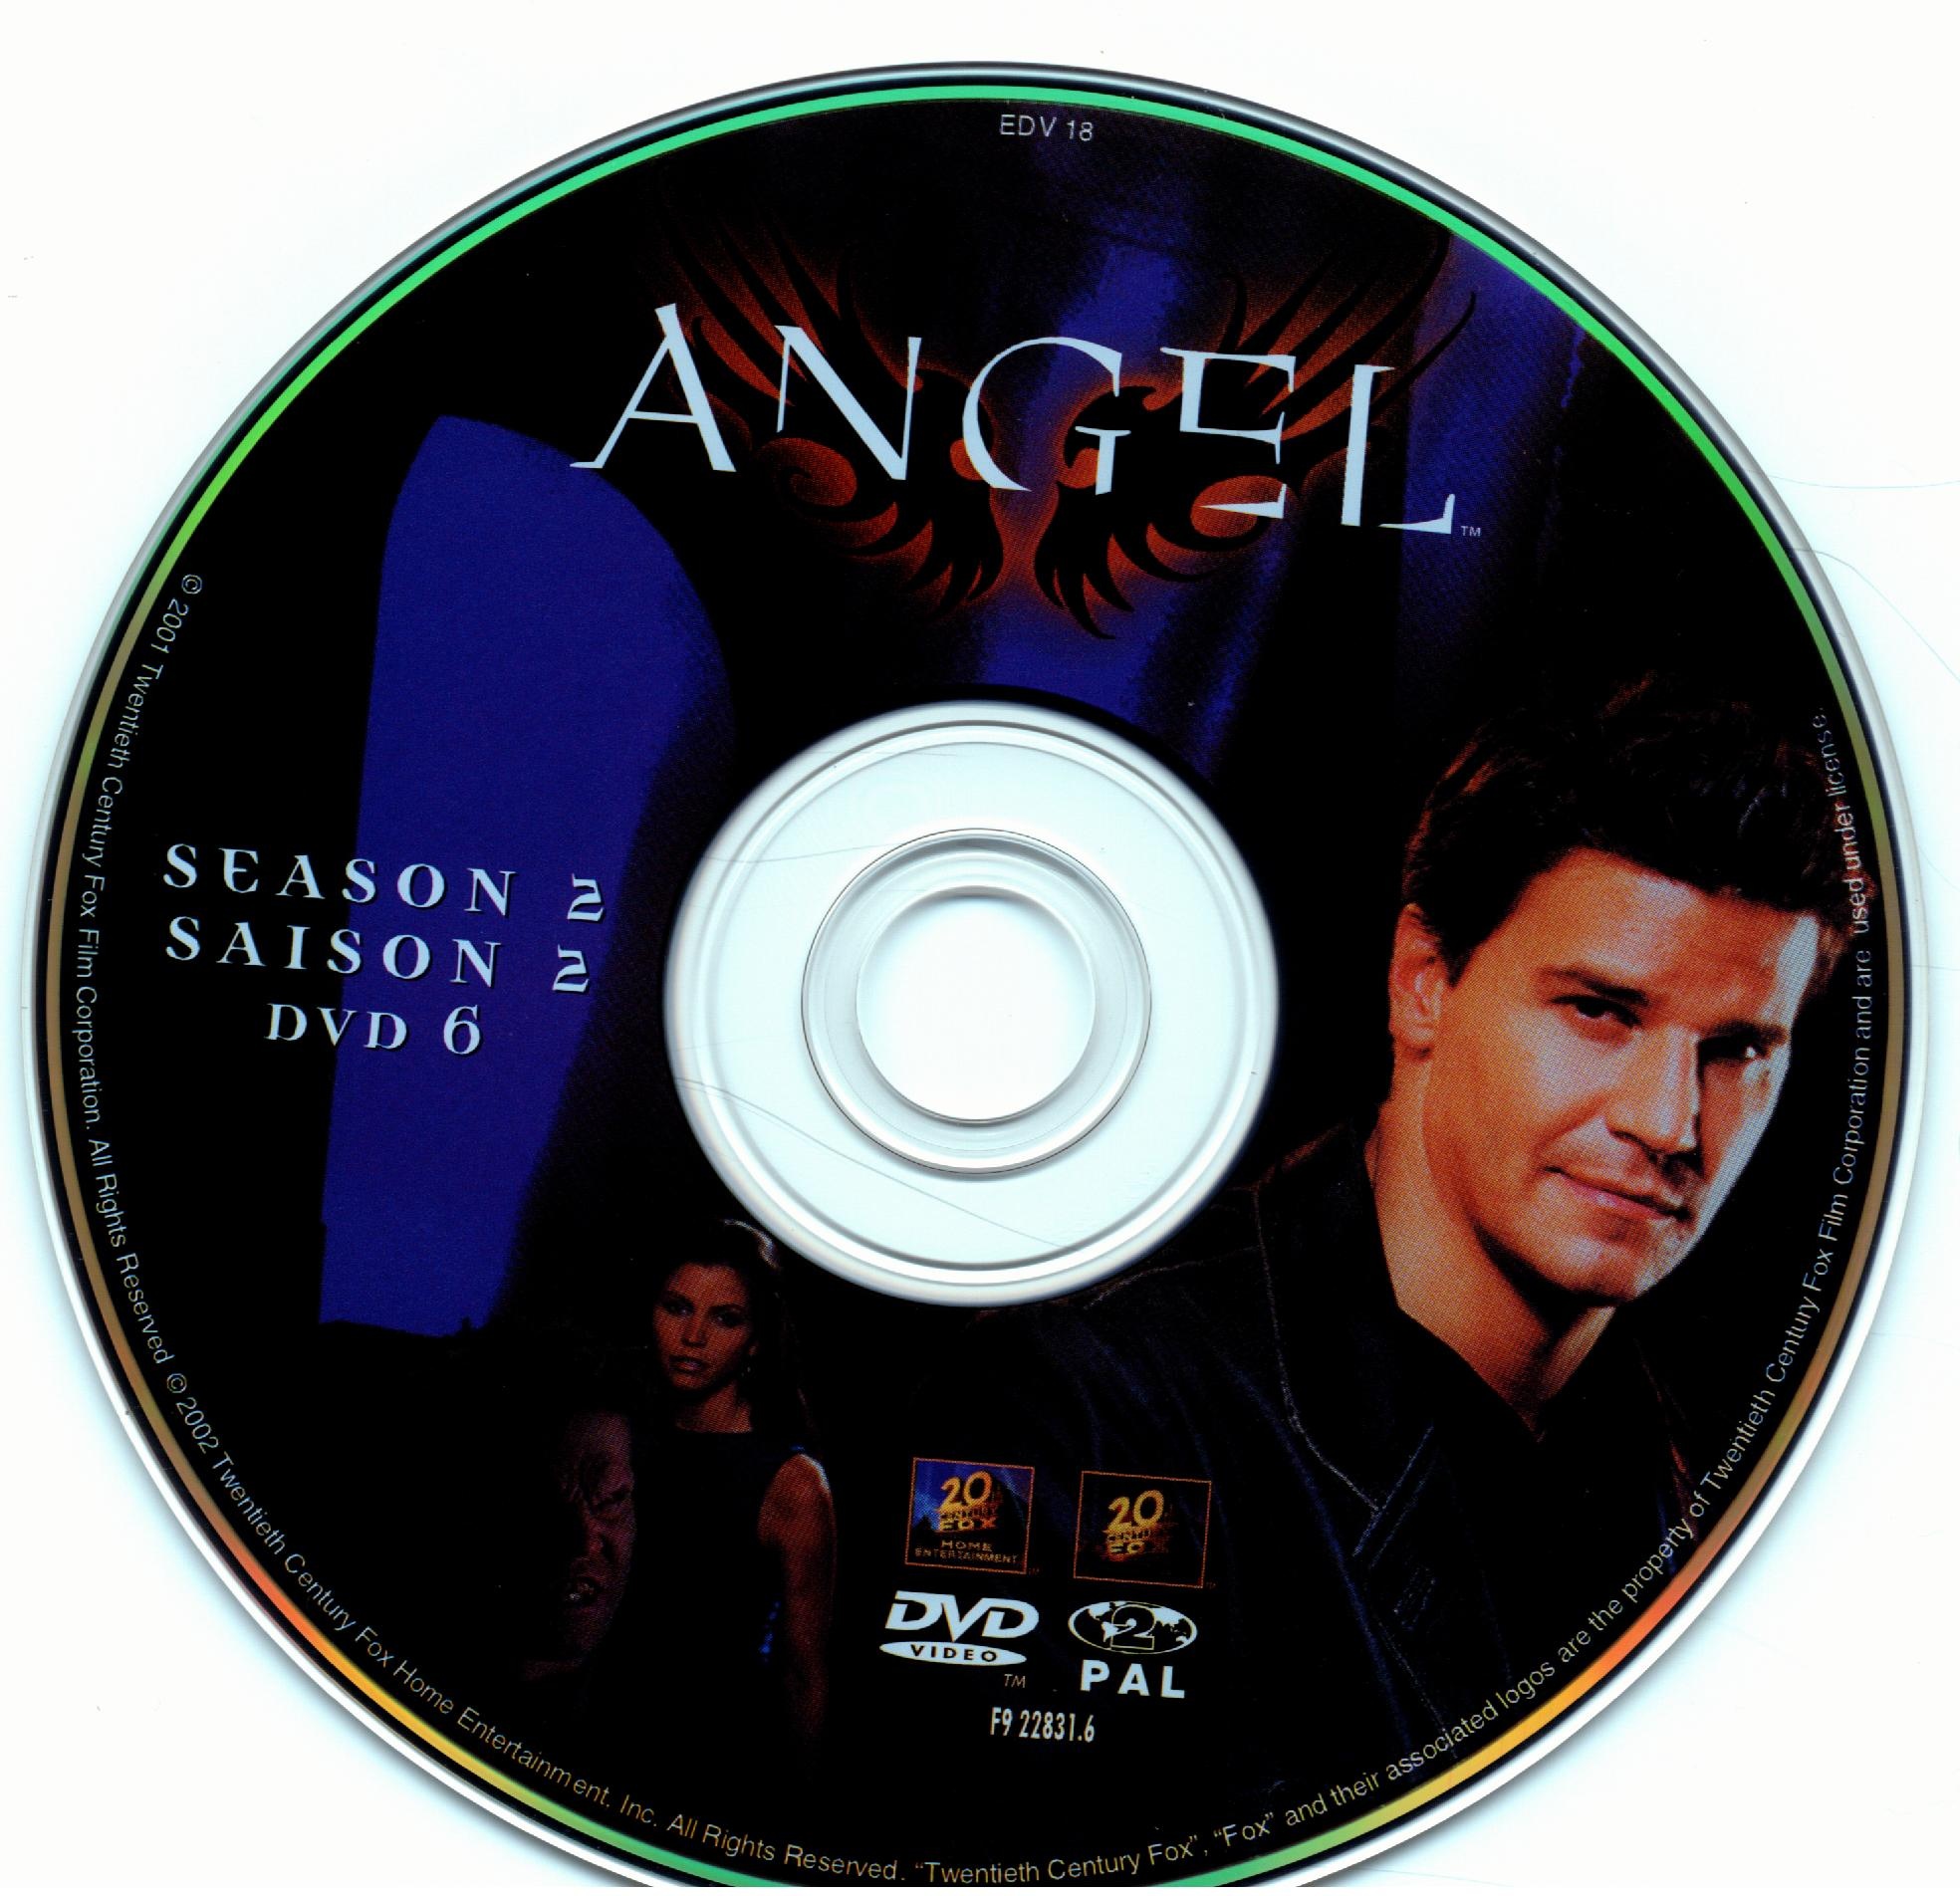 Angel Saison 2 dvd 6